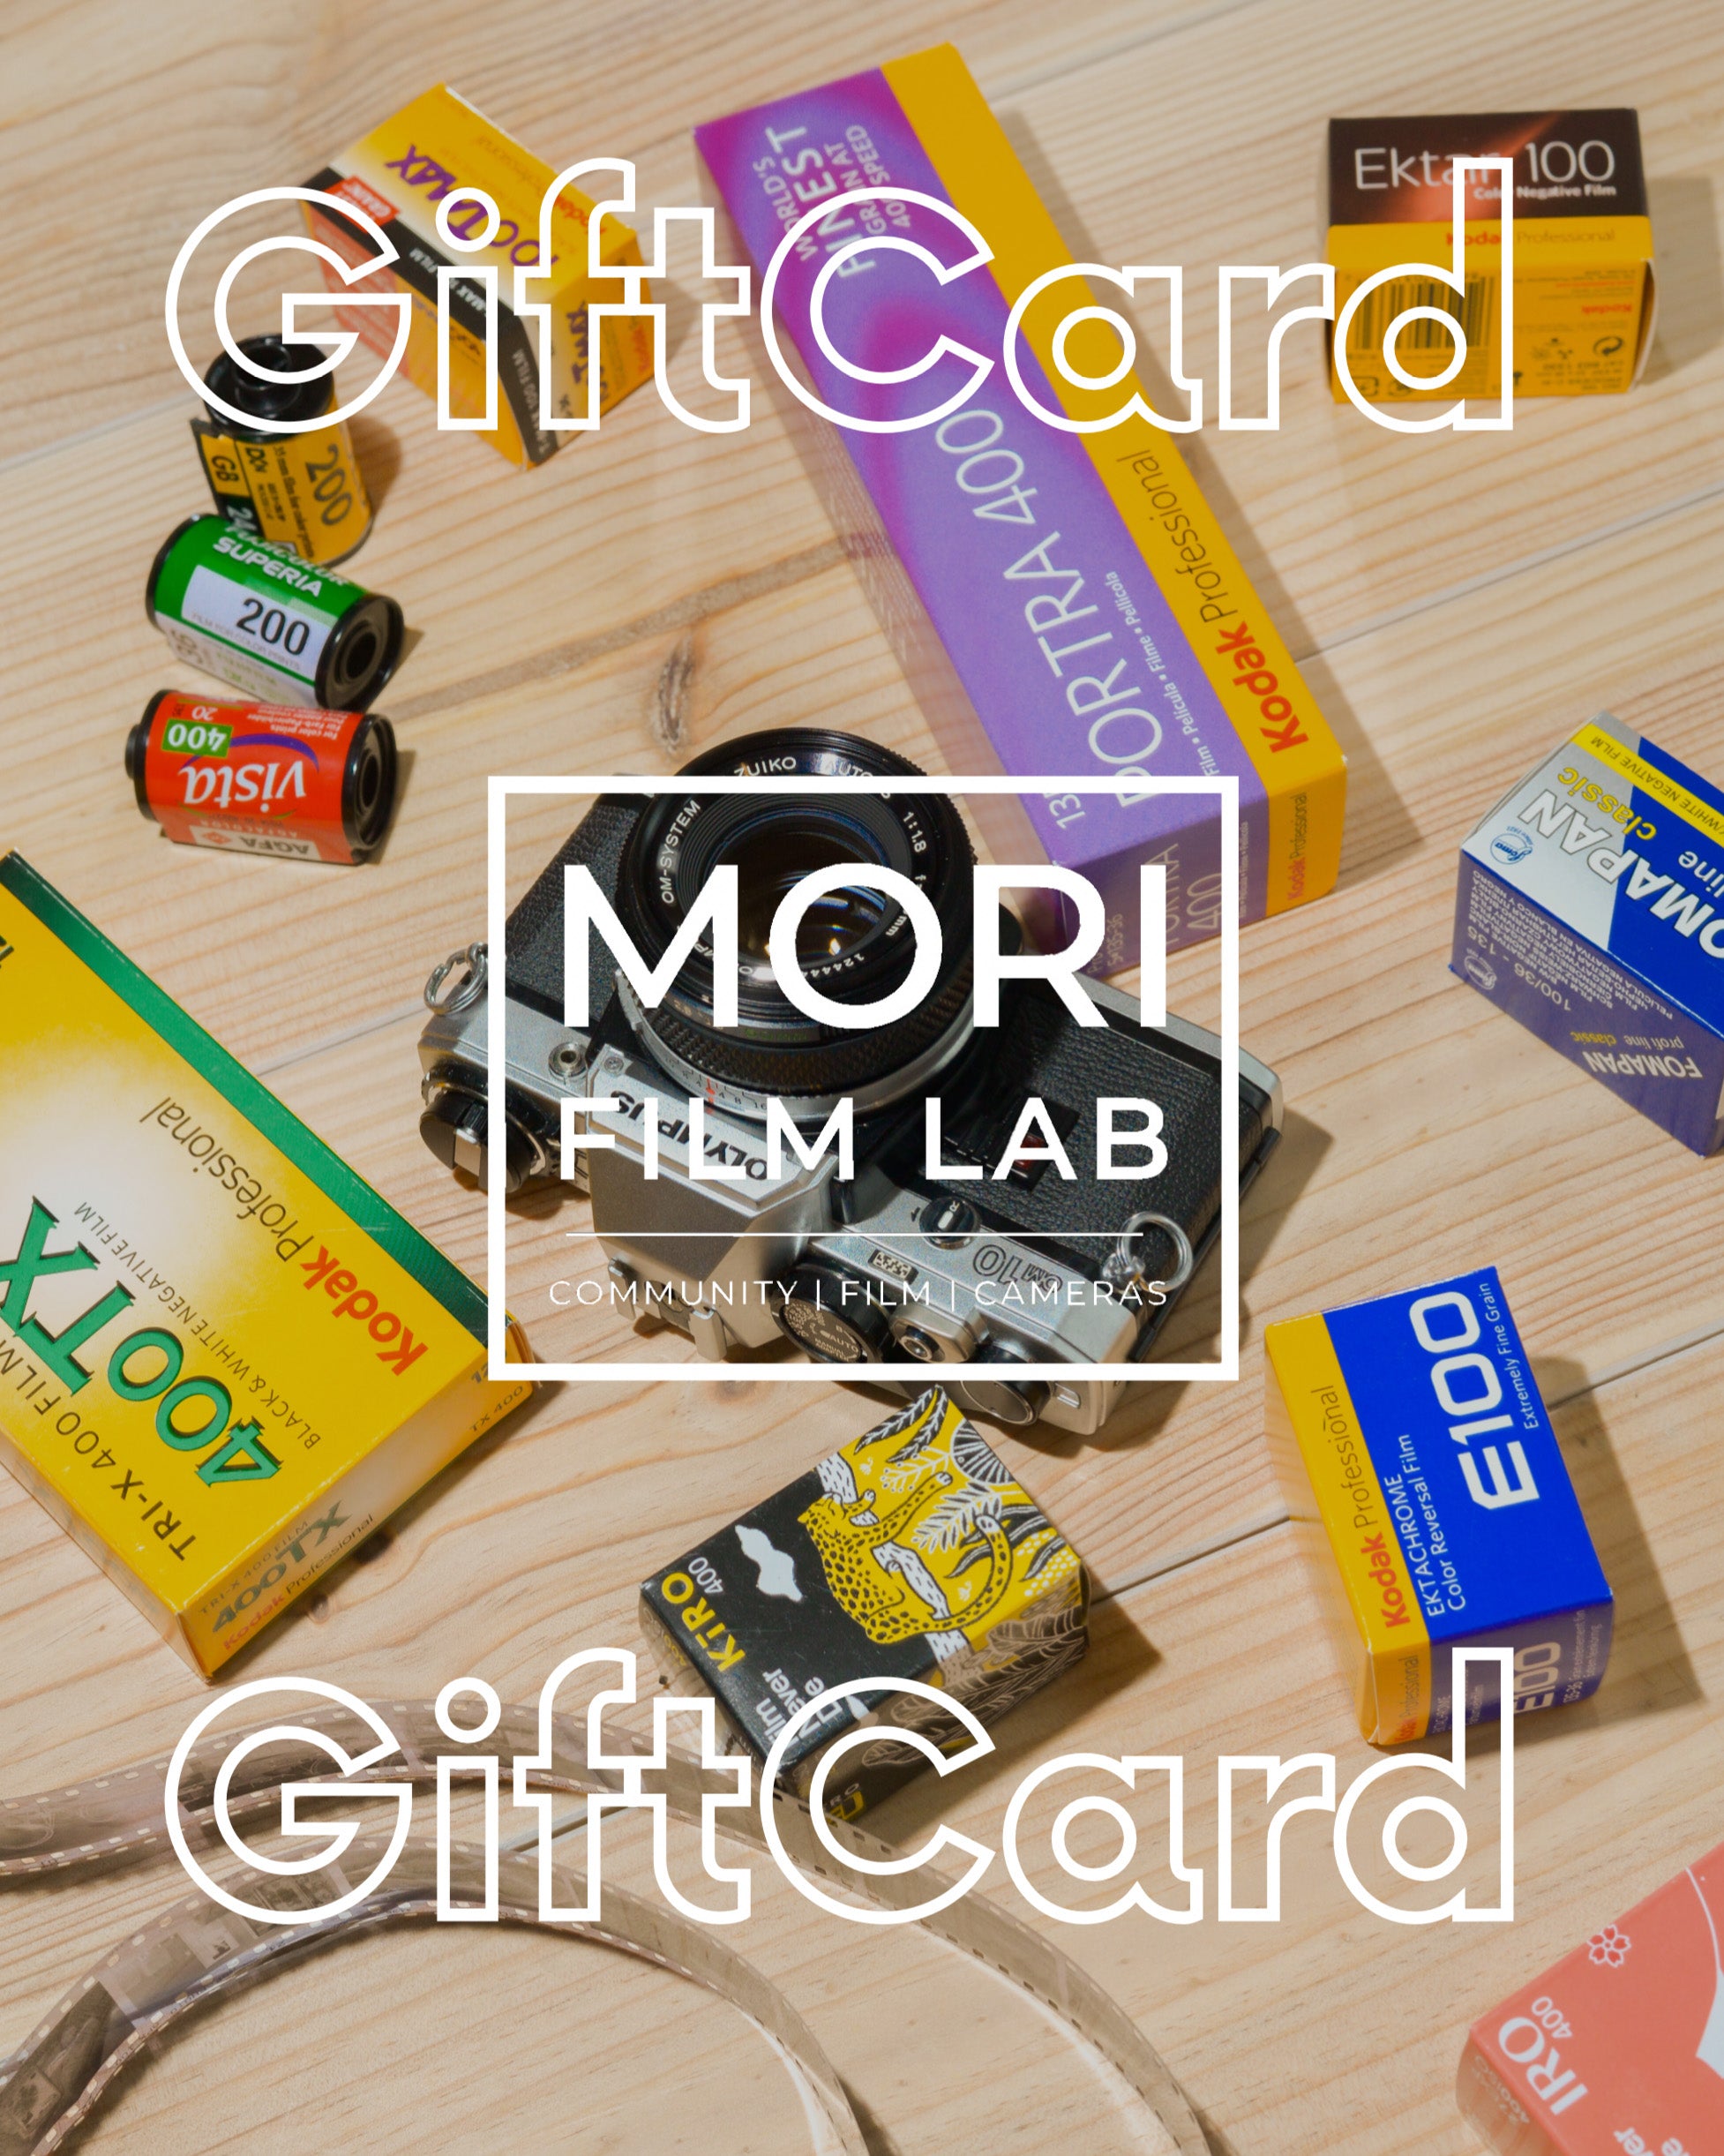 Mori Film Lab Gift Card